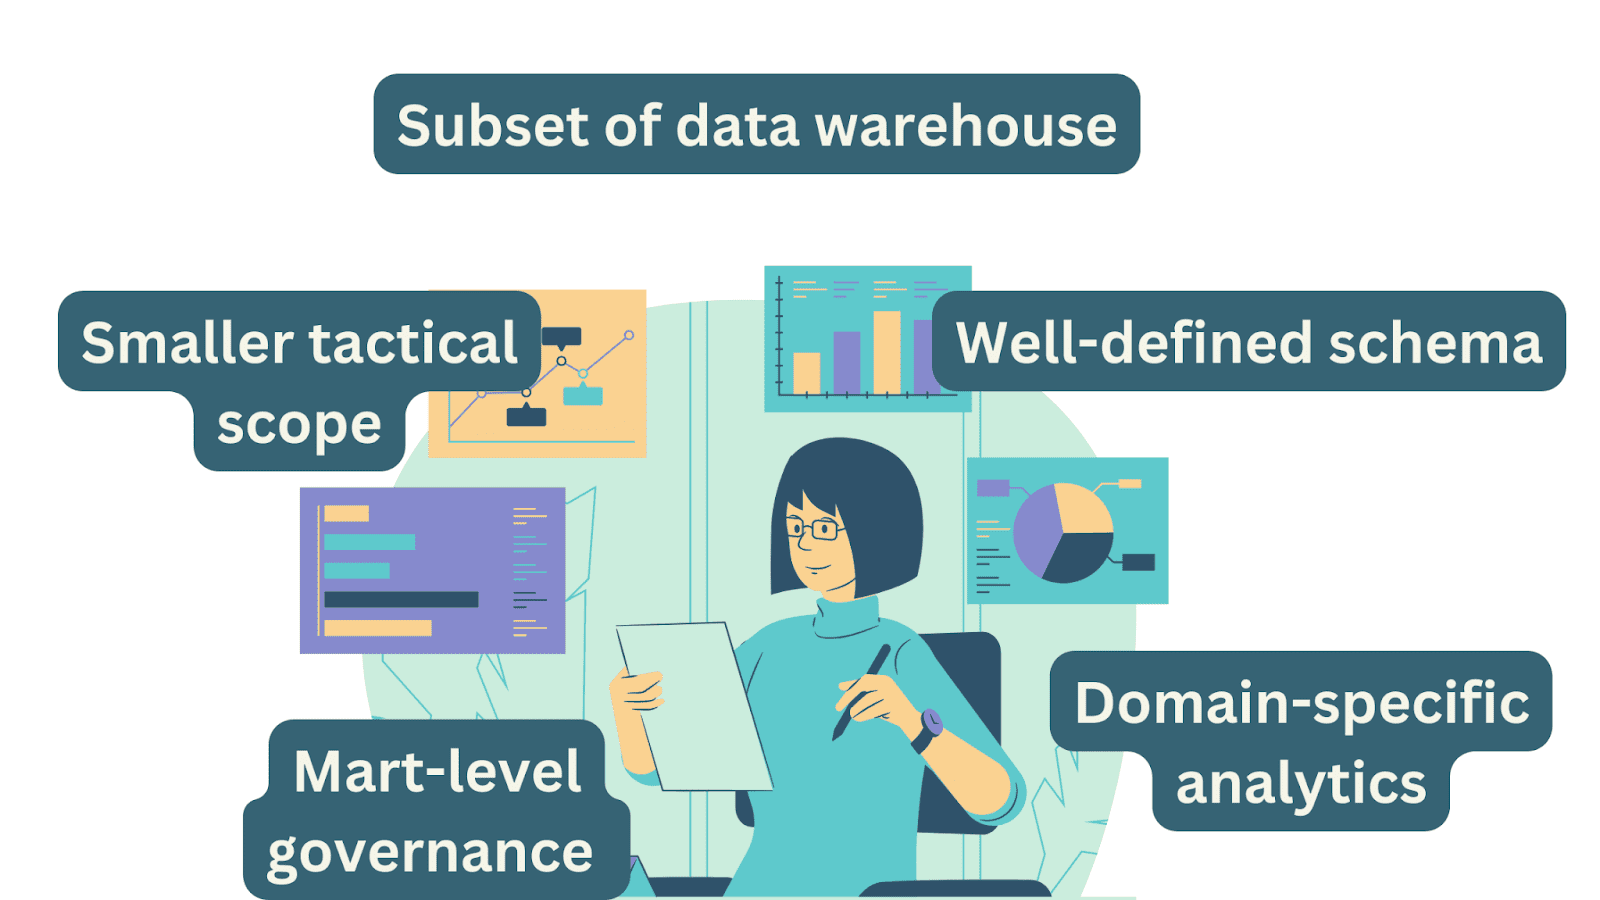 c data warehouses data lakes data marts need help deciding 1